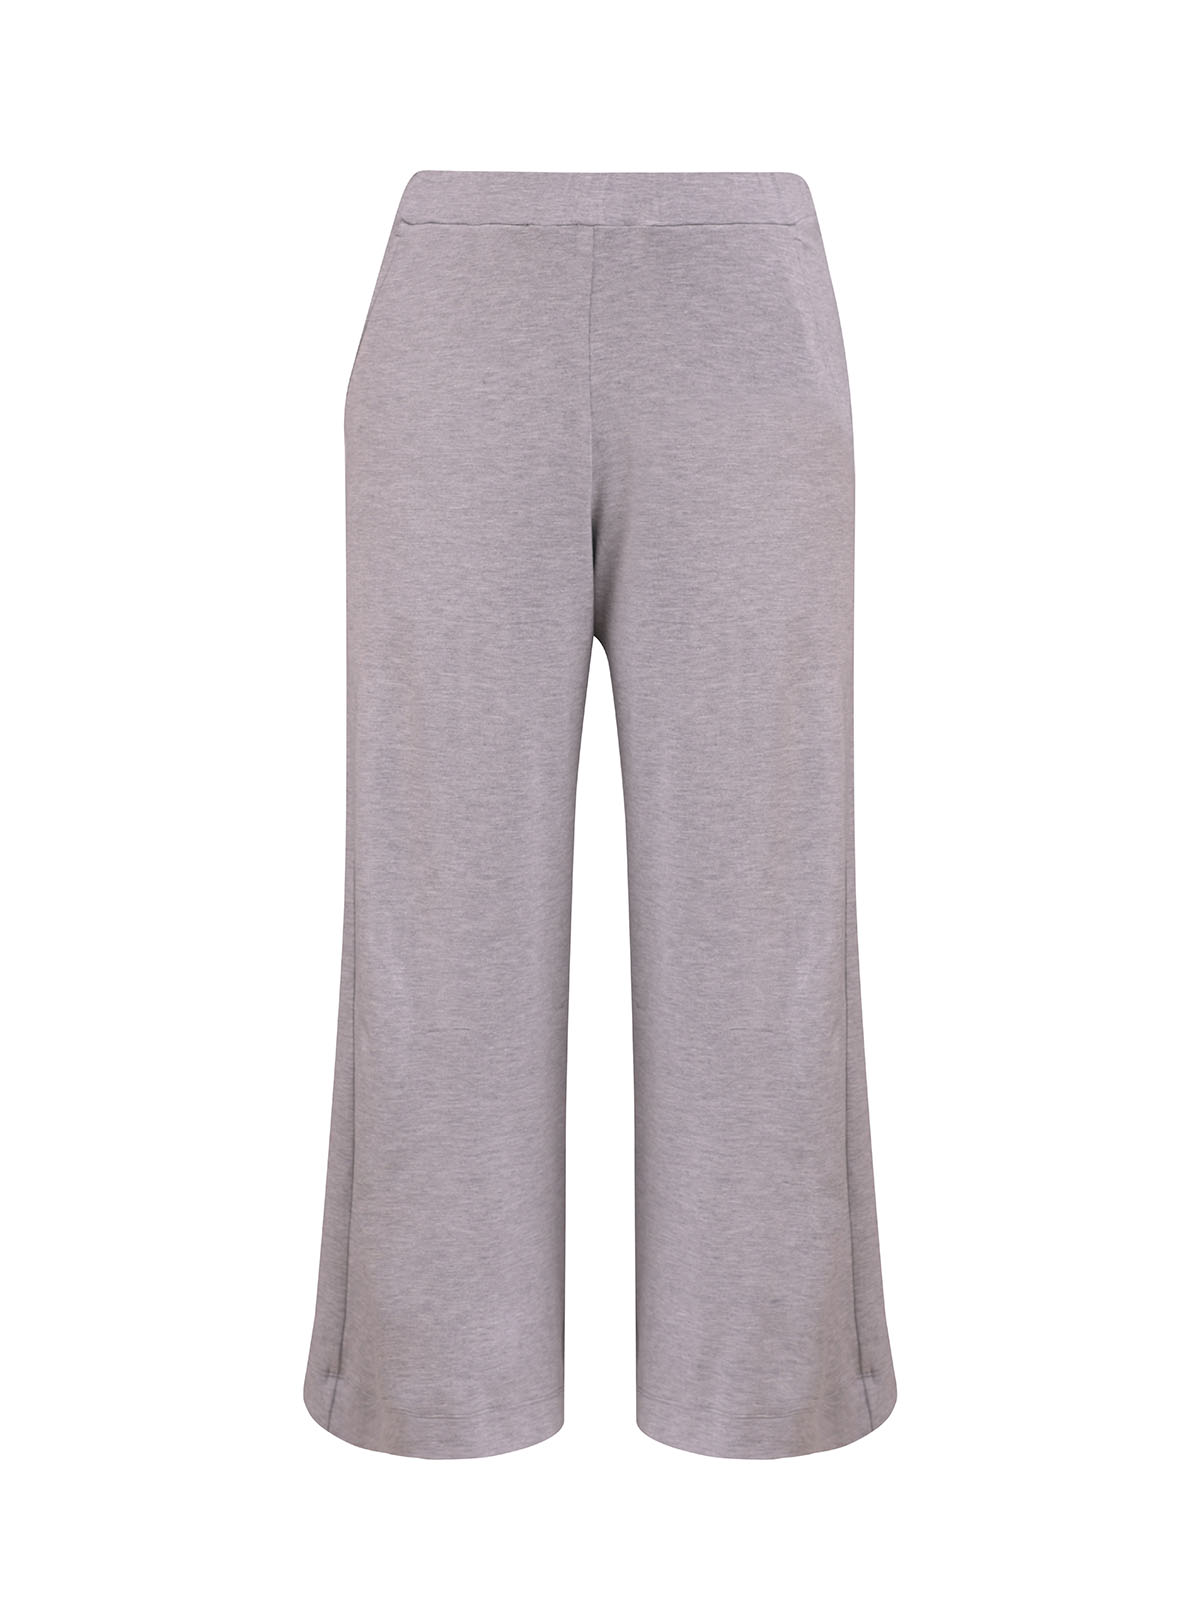 Alembika Easy Knit Crop Pant, Grey - Statement Boutique